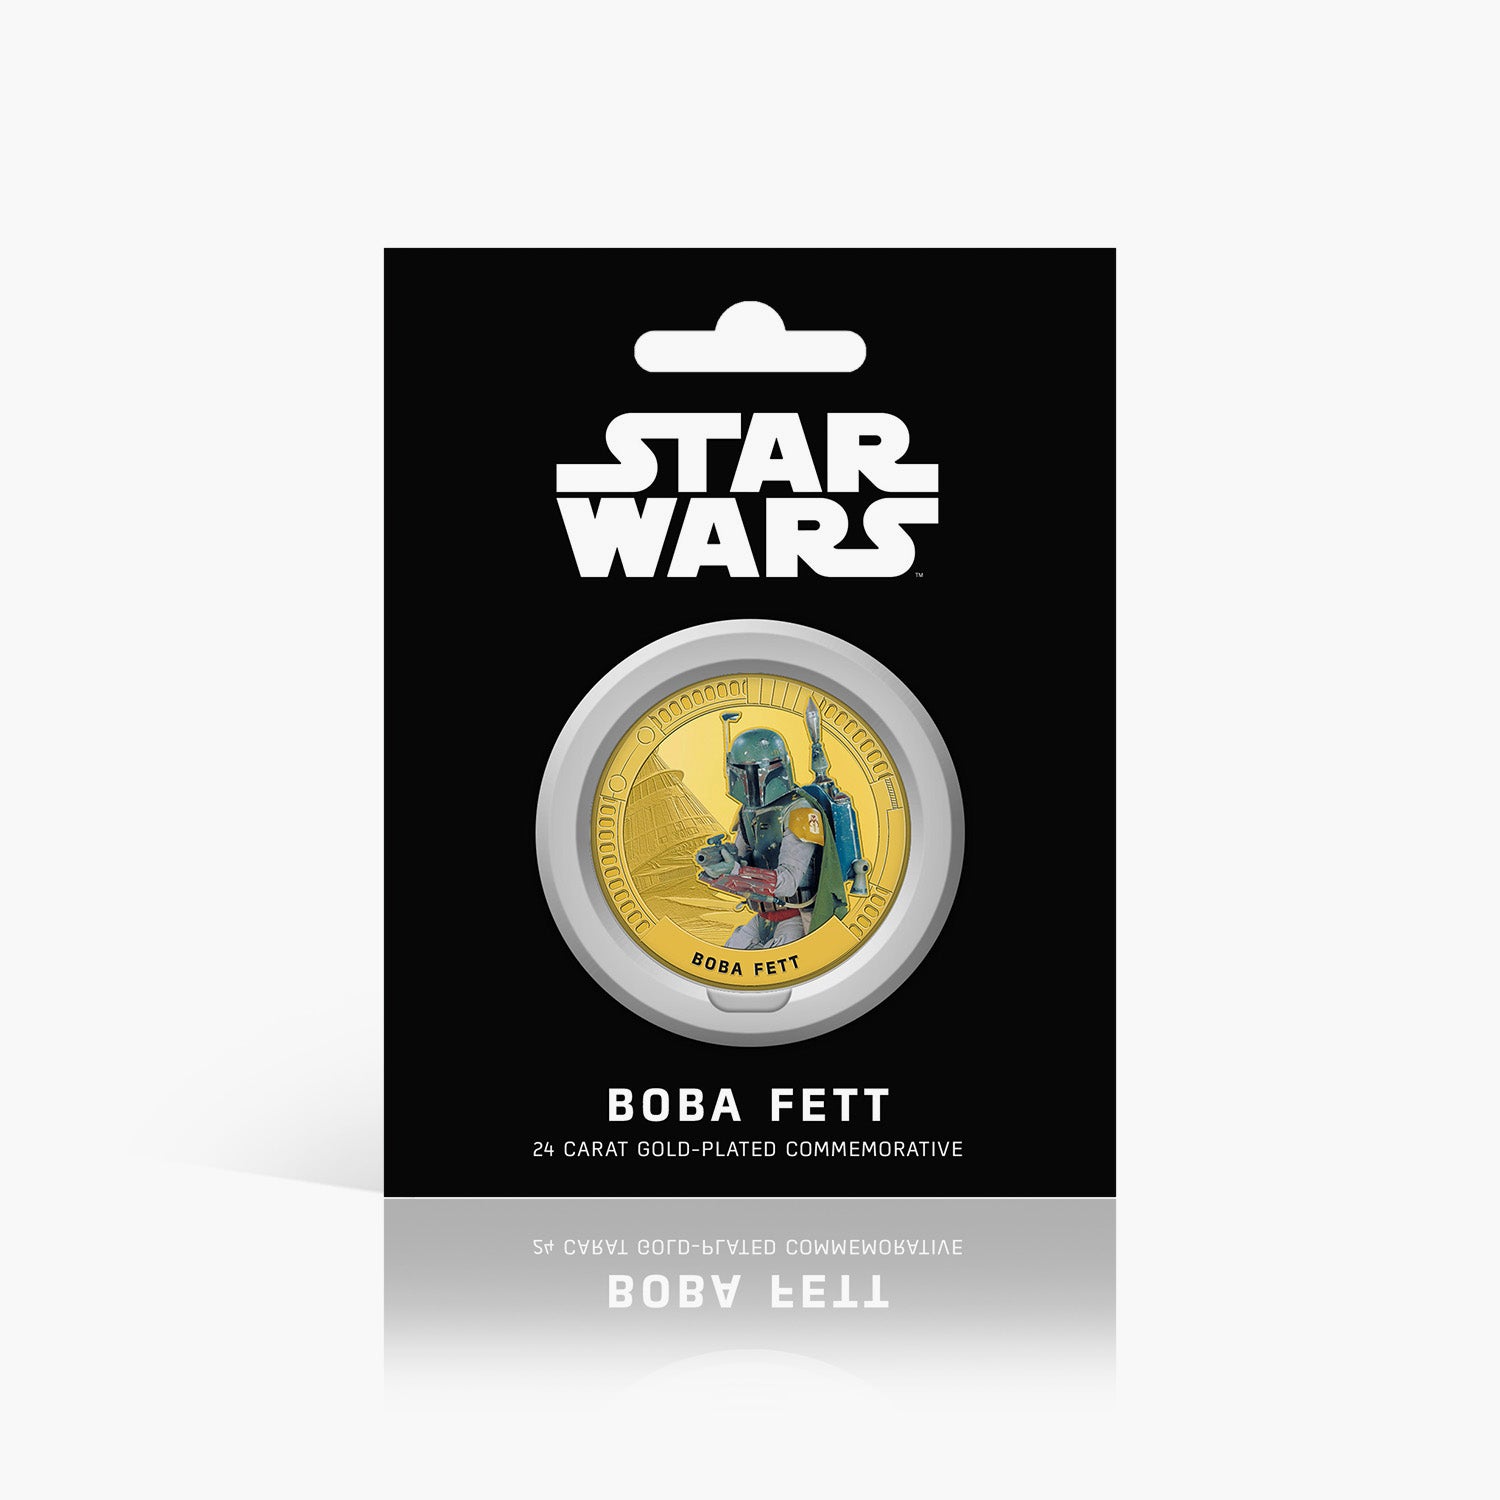 Boba Fett Gold - Plated Commemorative